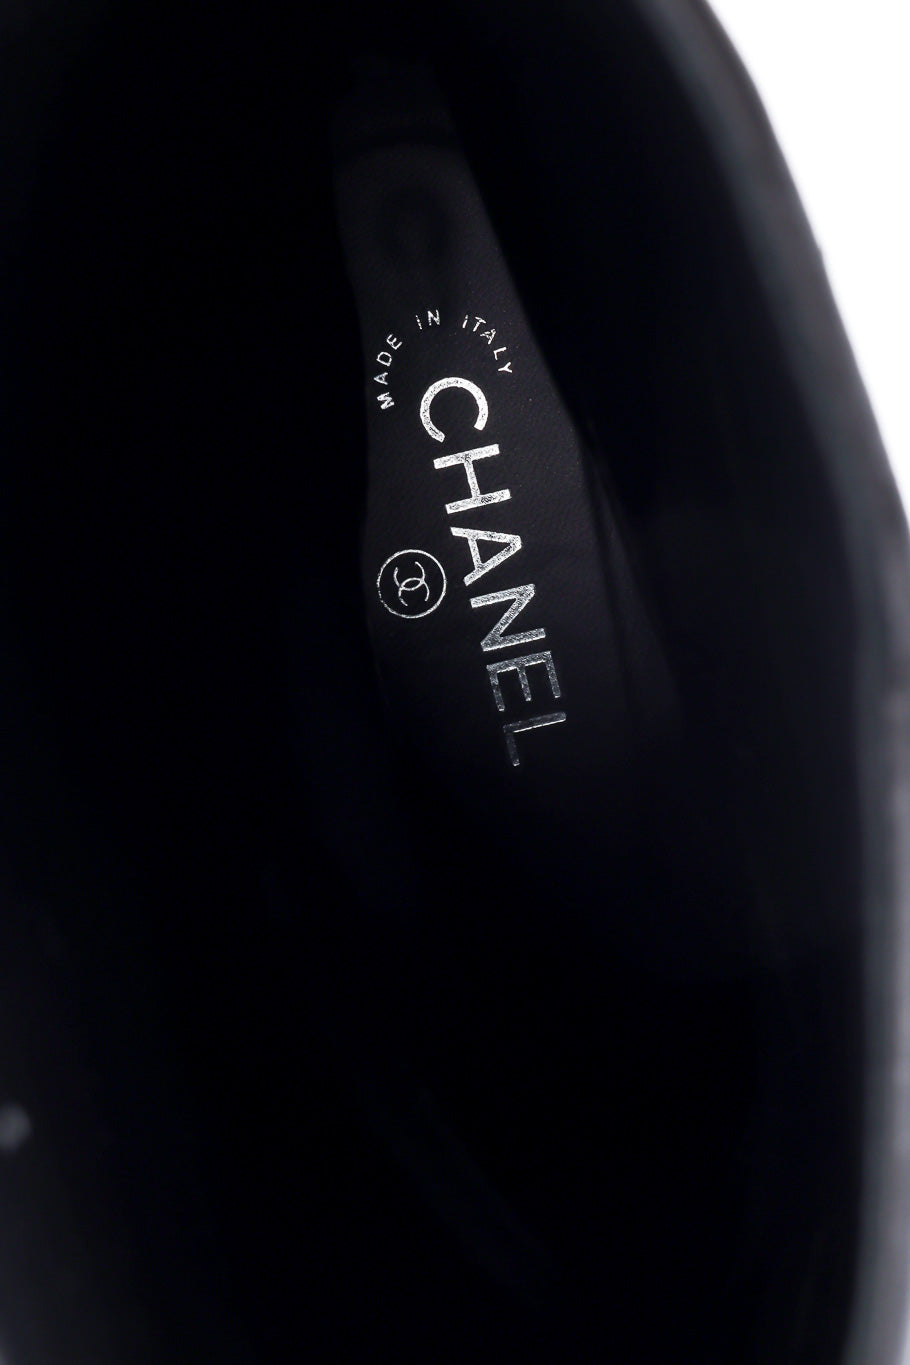 Chanel interlocking CC mid-calf boots designer insole @recessla